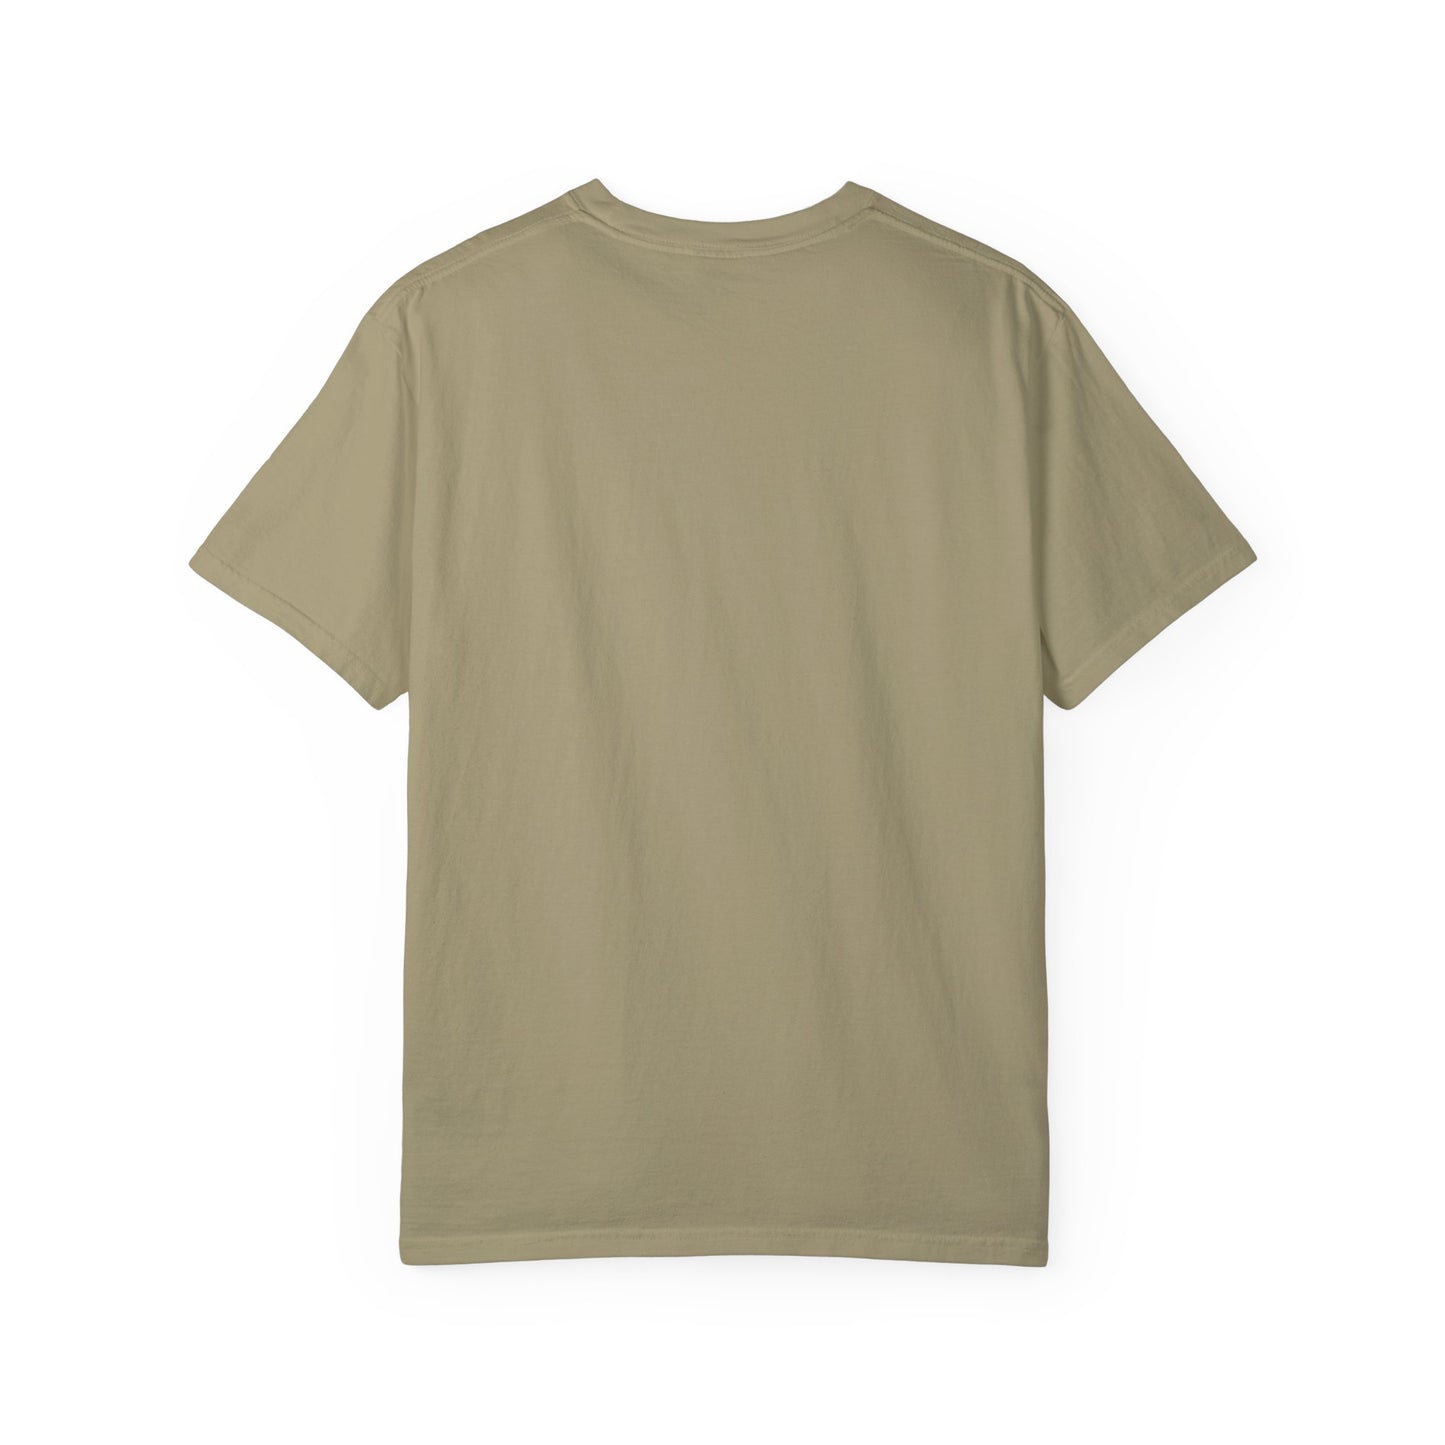 Hip Hop Teddy Bear Graphic Unisex Garment-dyed T-shirt Cotton Funny Humorous Graphic Soft Premium Unisex Men Women Khaki T-shirt Birthday Gift-46